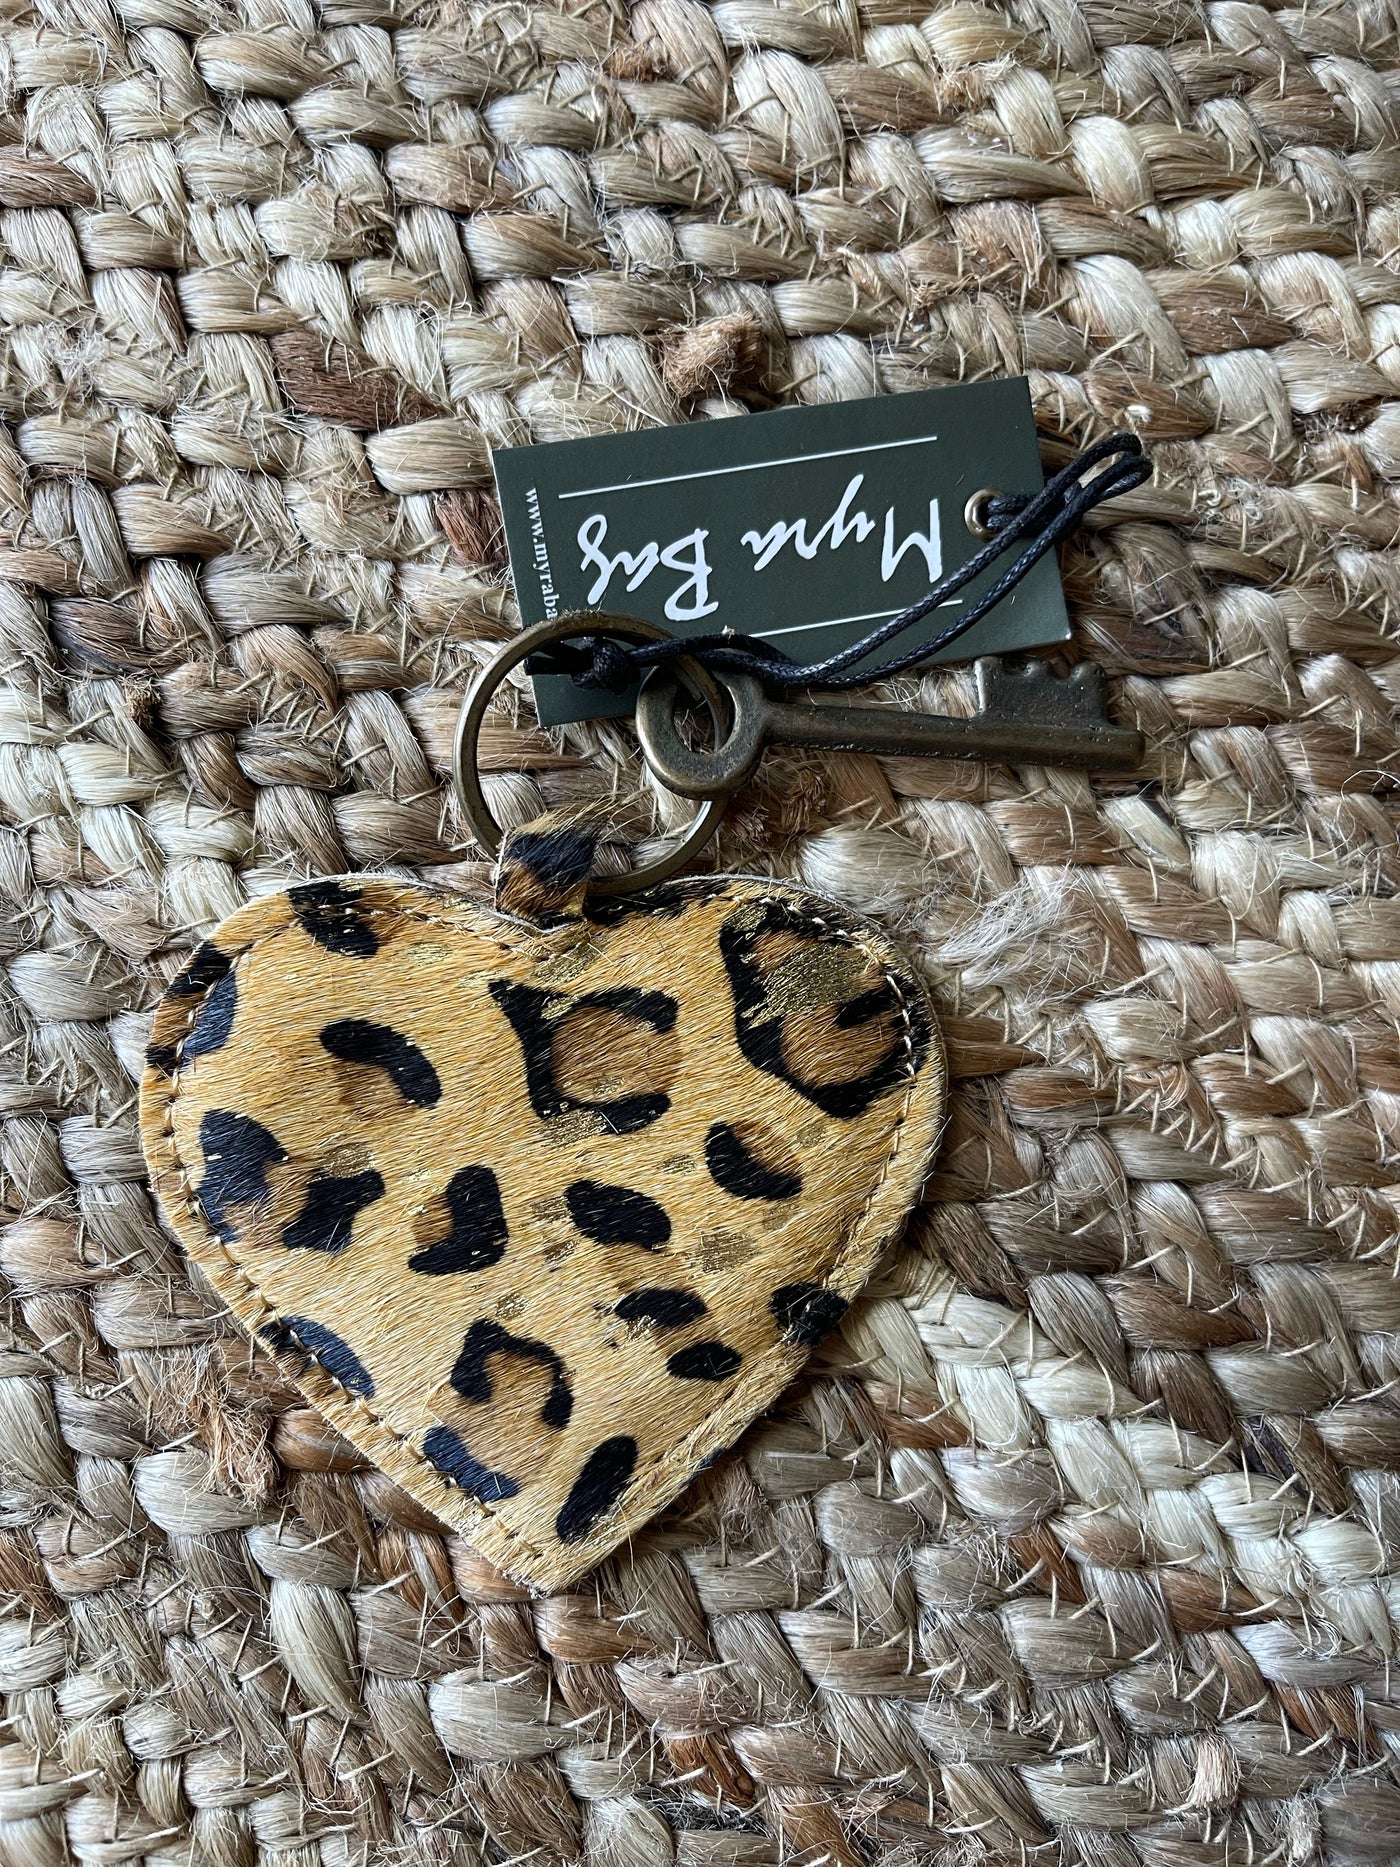 Keys To My Heart  by Myra Bags